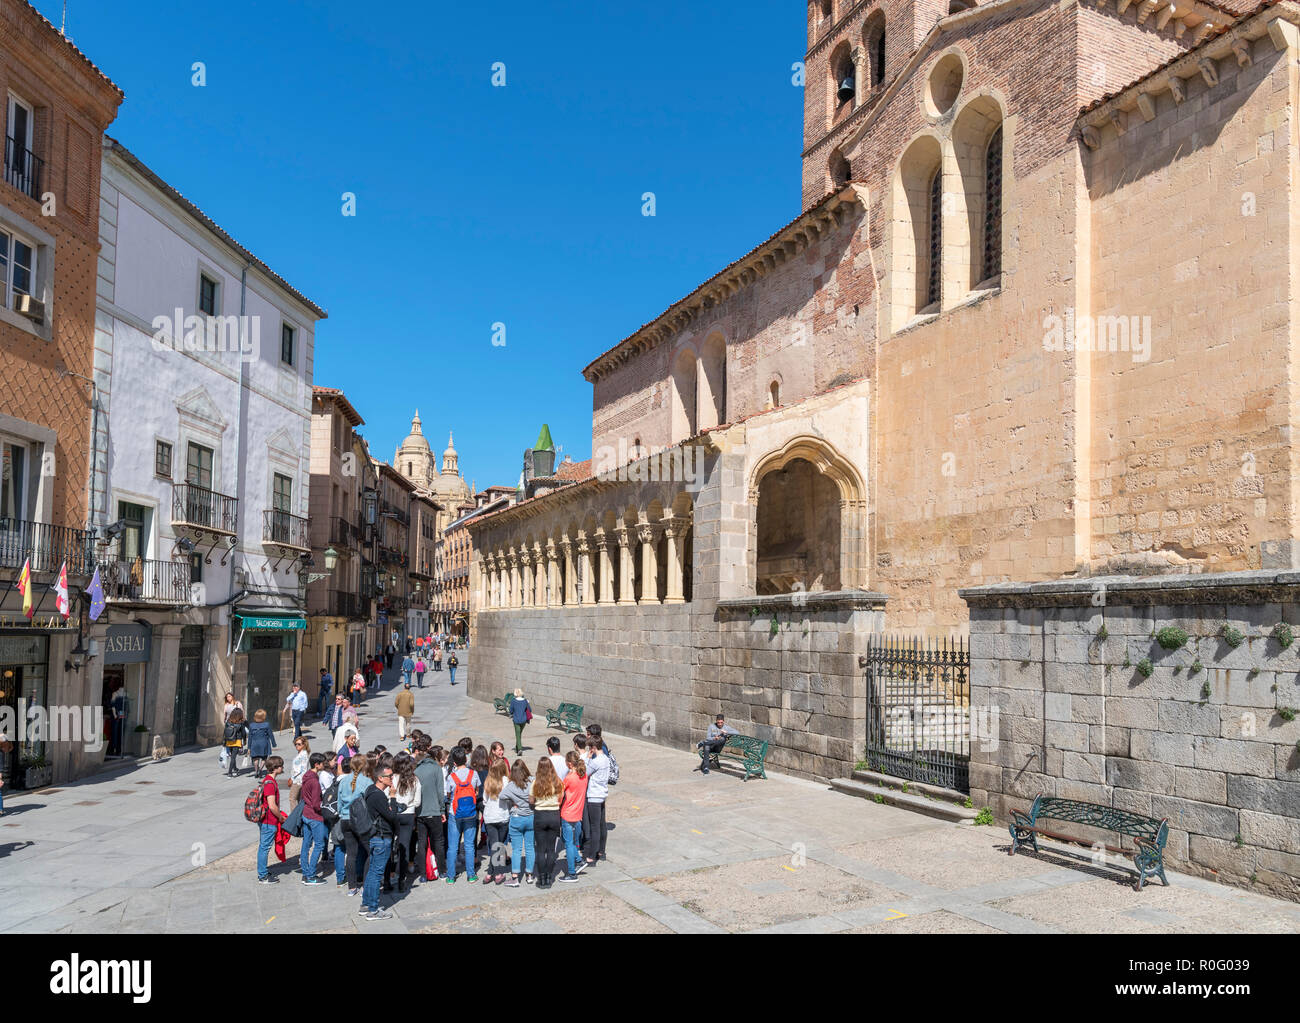 Group of school students in the Plaza de San Martin outside the 12th century church of San Martin, Segovia, Castilla y Leon, Spain Stock Photo